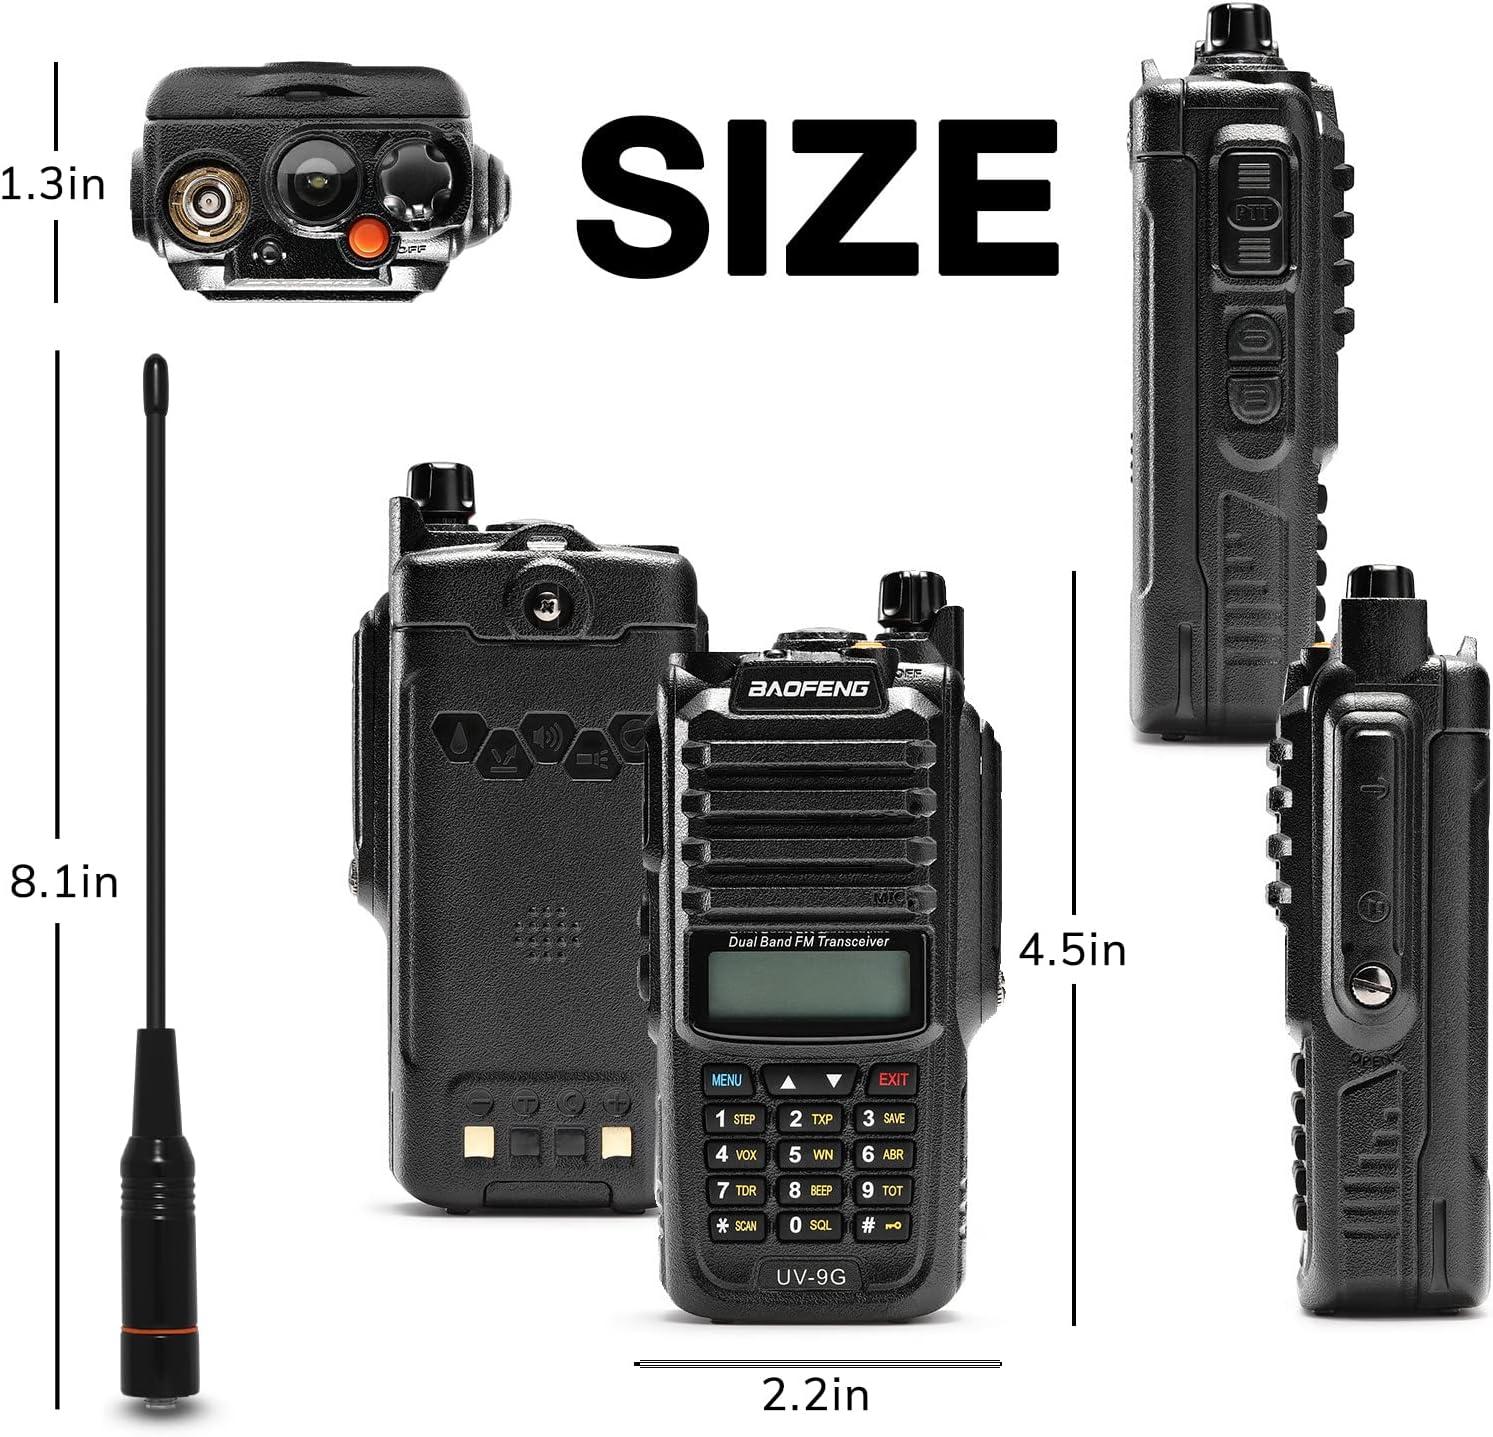 UV-9R Dual Band Radio - Baofeng